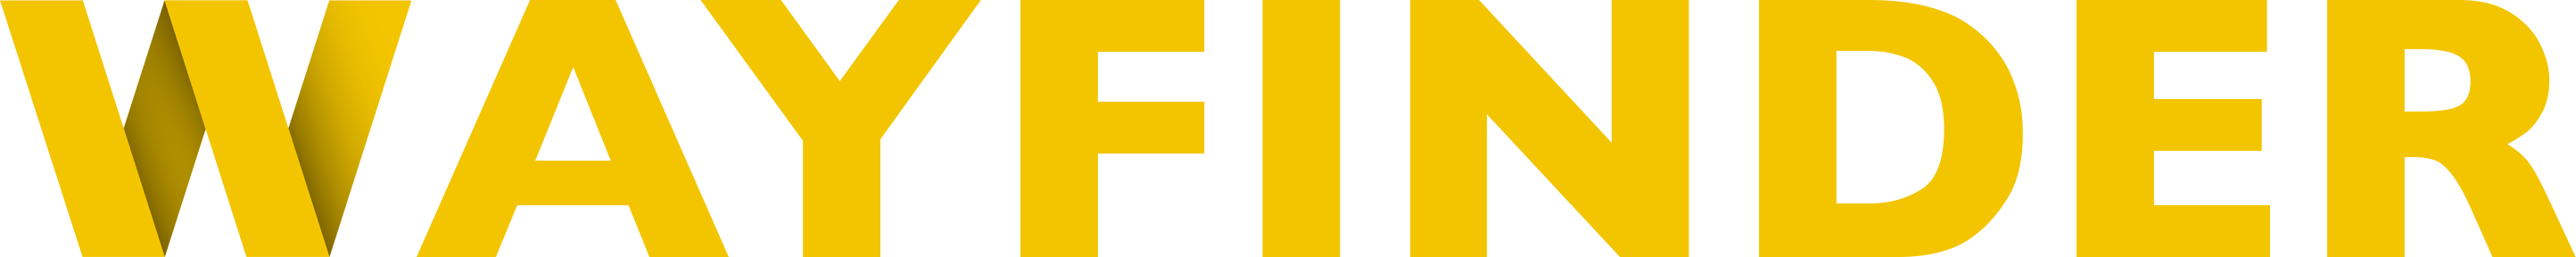 Wayfinder Logo Word Yellow